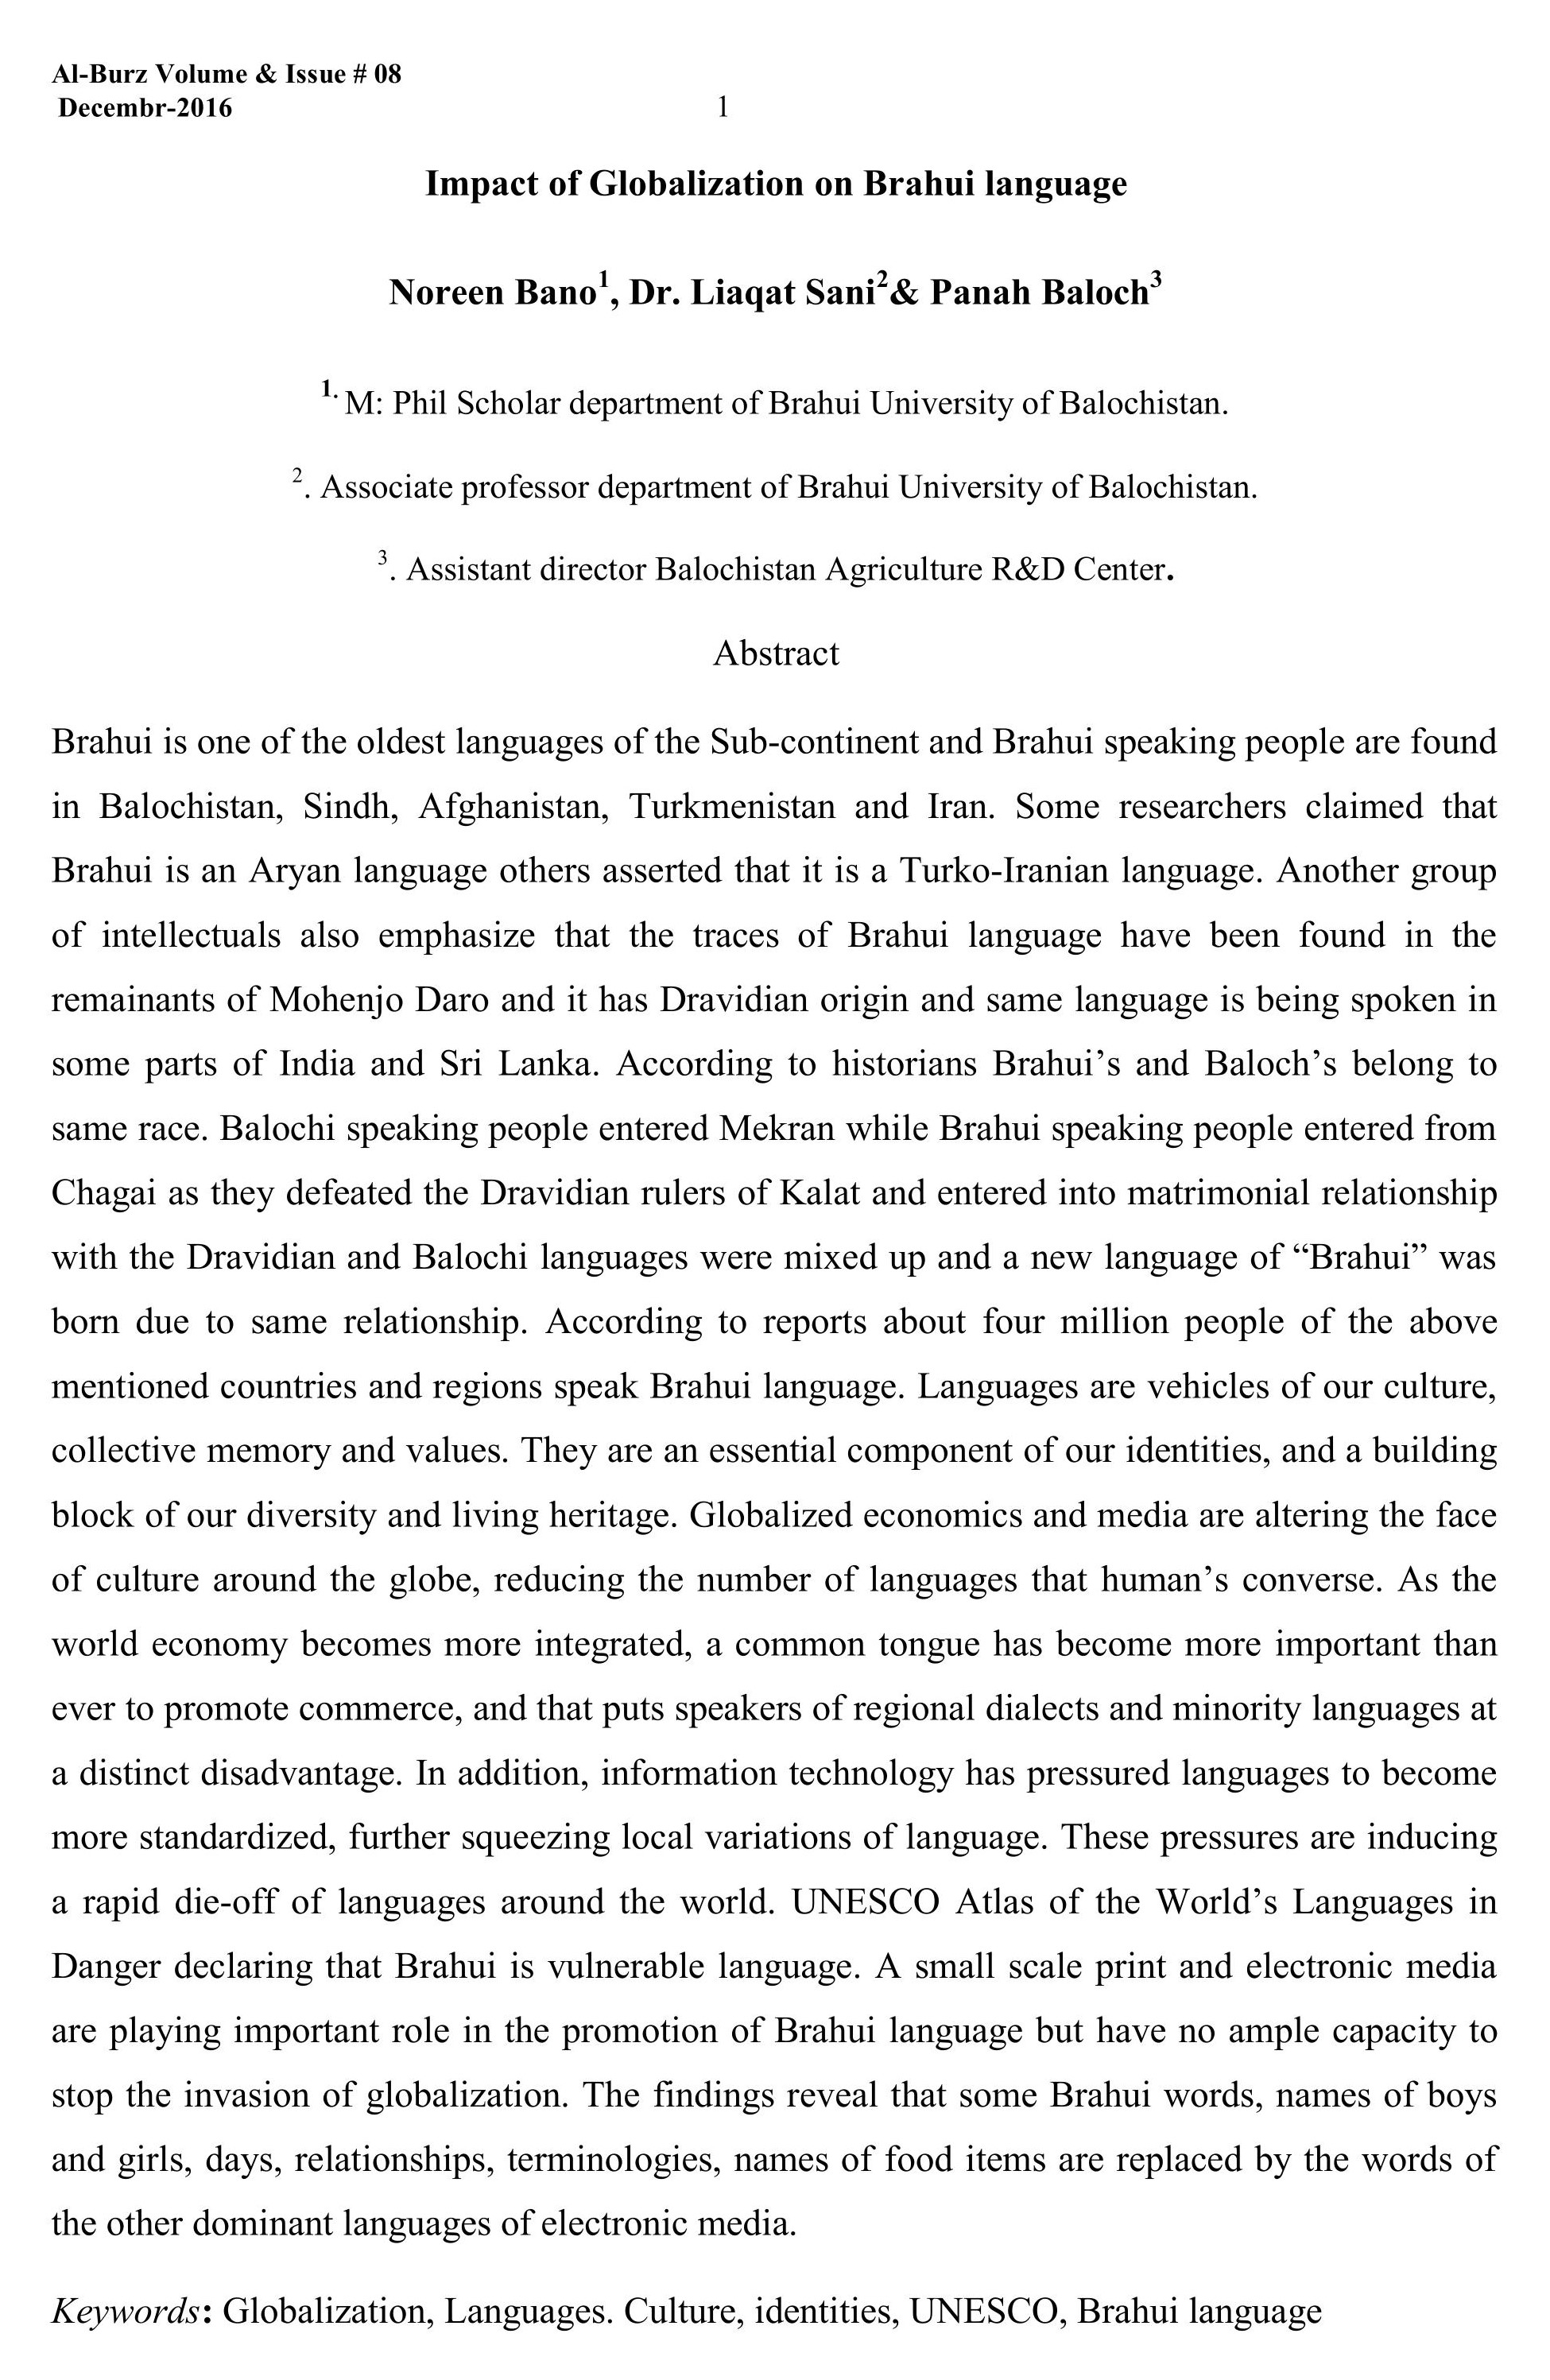 Impact of Globalization on Brahui language